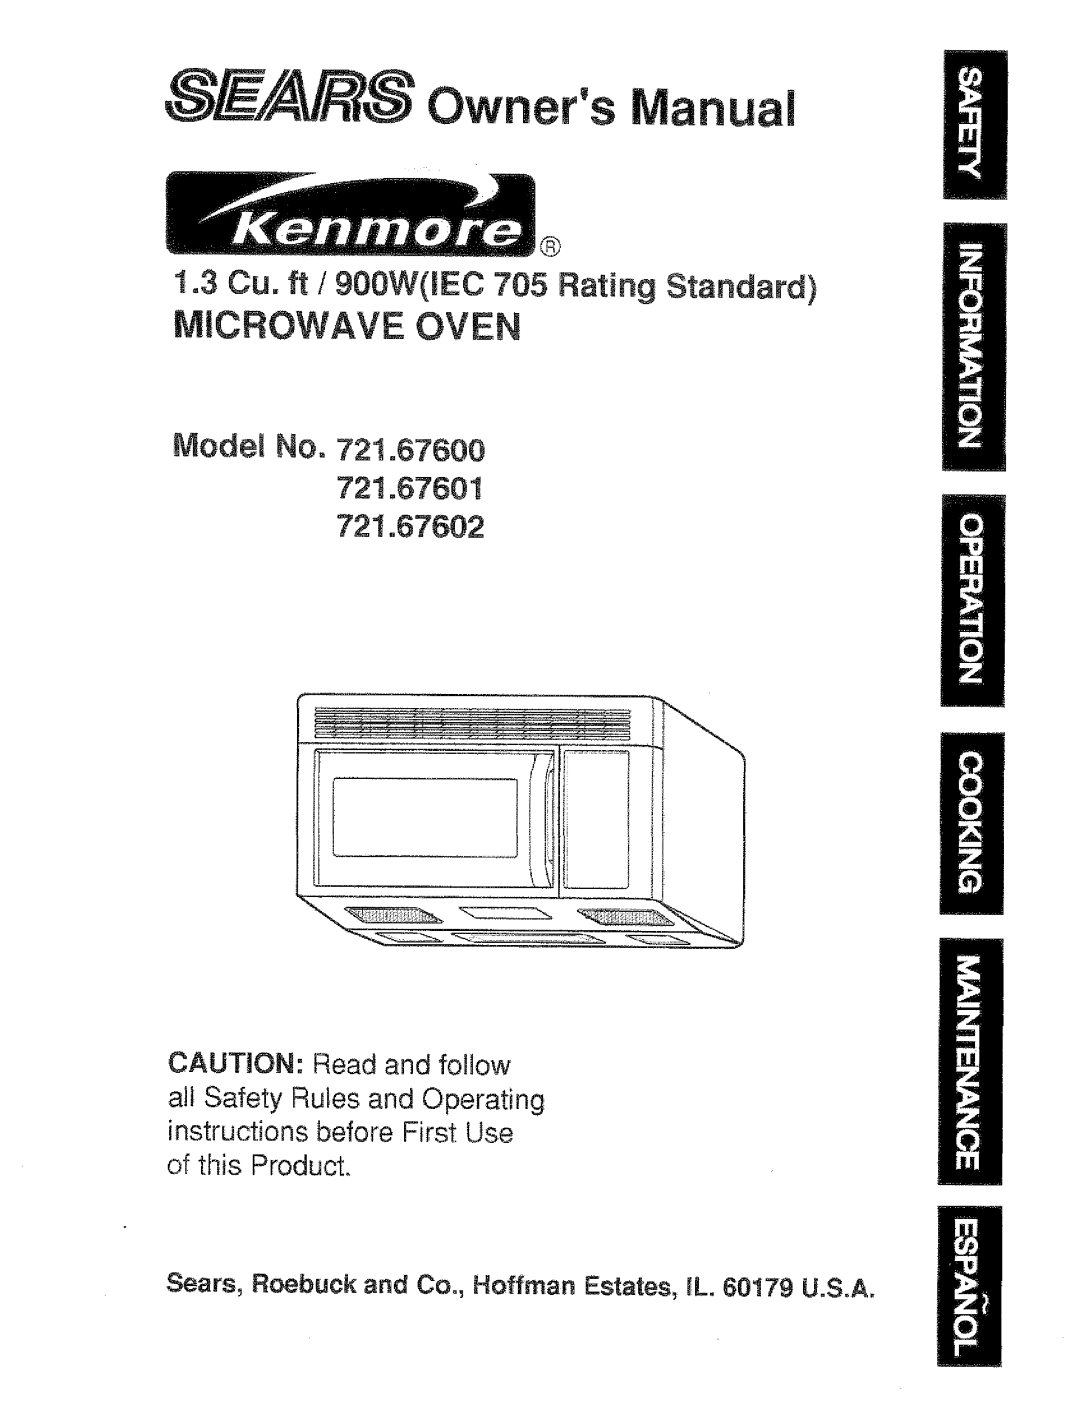 Sears owner manual Microwave Oven, 1.3Cu. ft / 900WEEC 705 Rating Standard, Model No. 721.67601 721.67602 